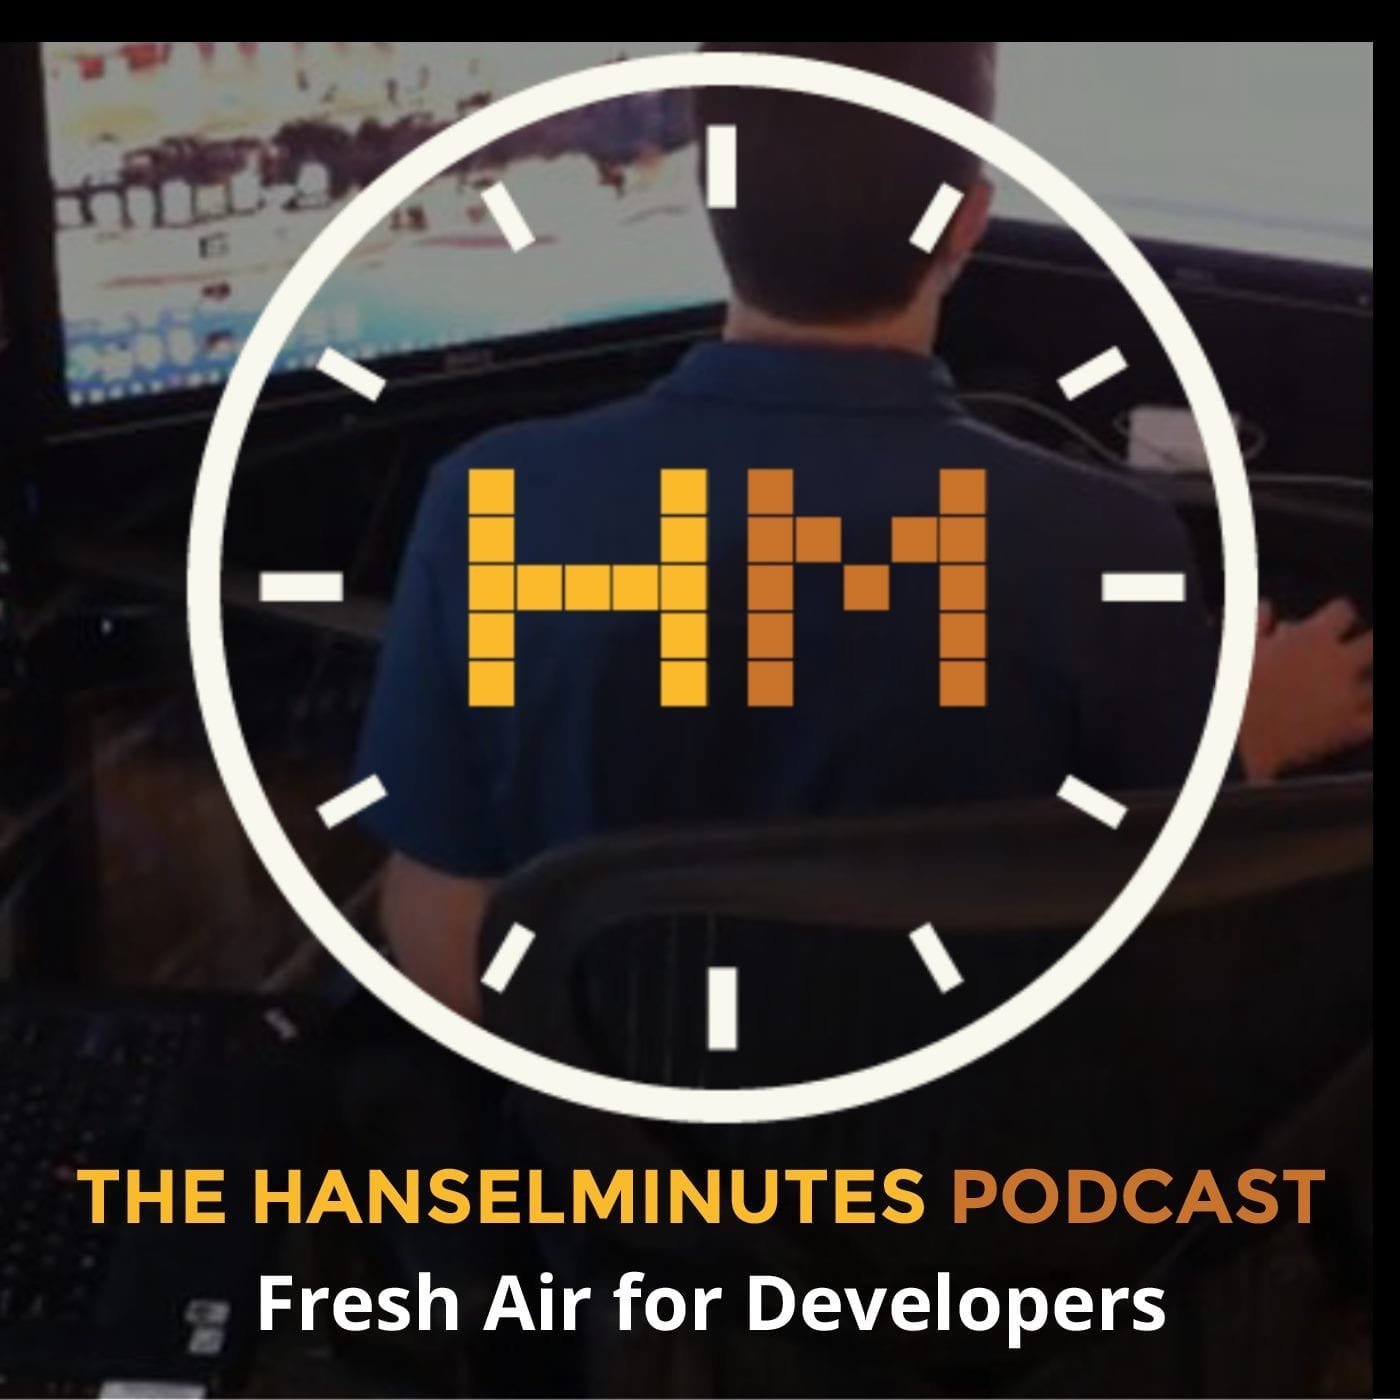 Hanselminutes podcast logo